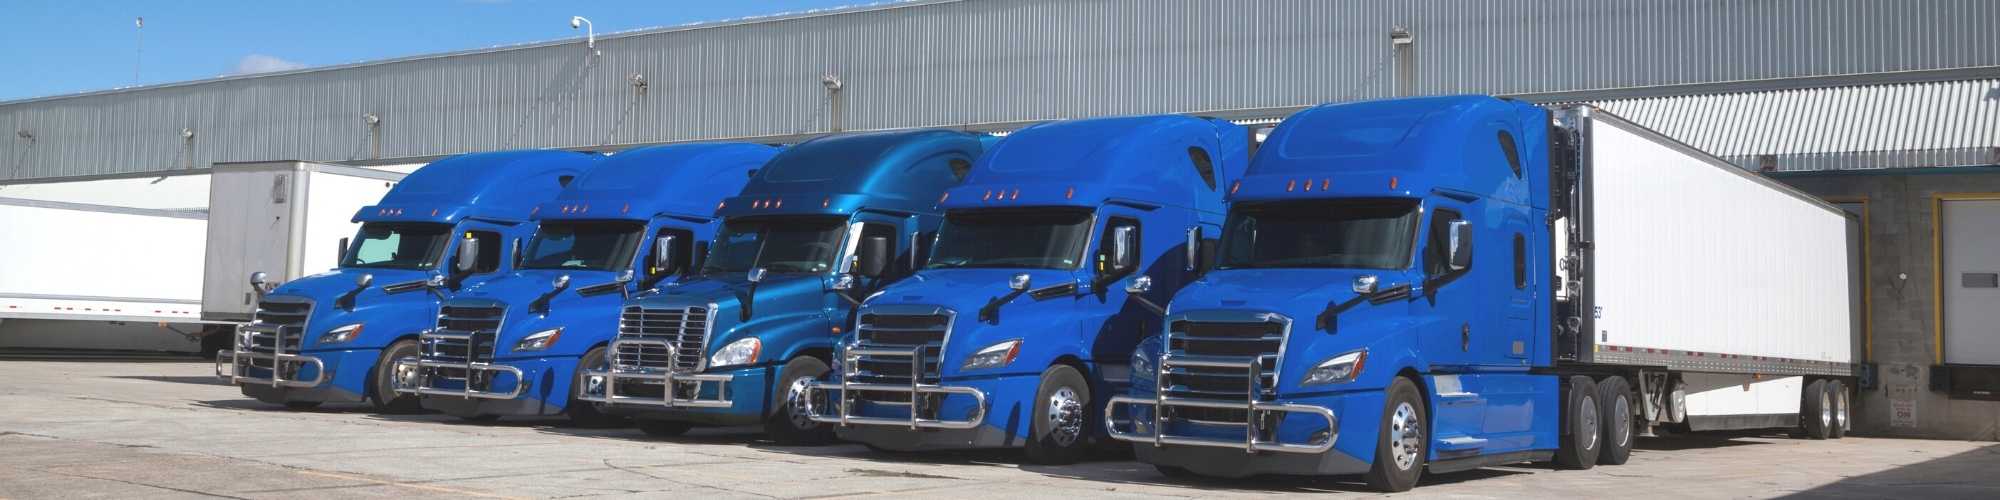 trucks ready for cross docking at warehouse